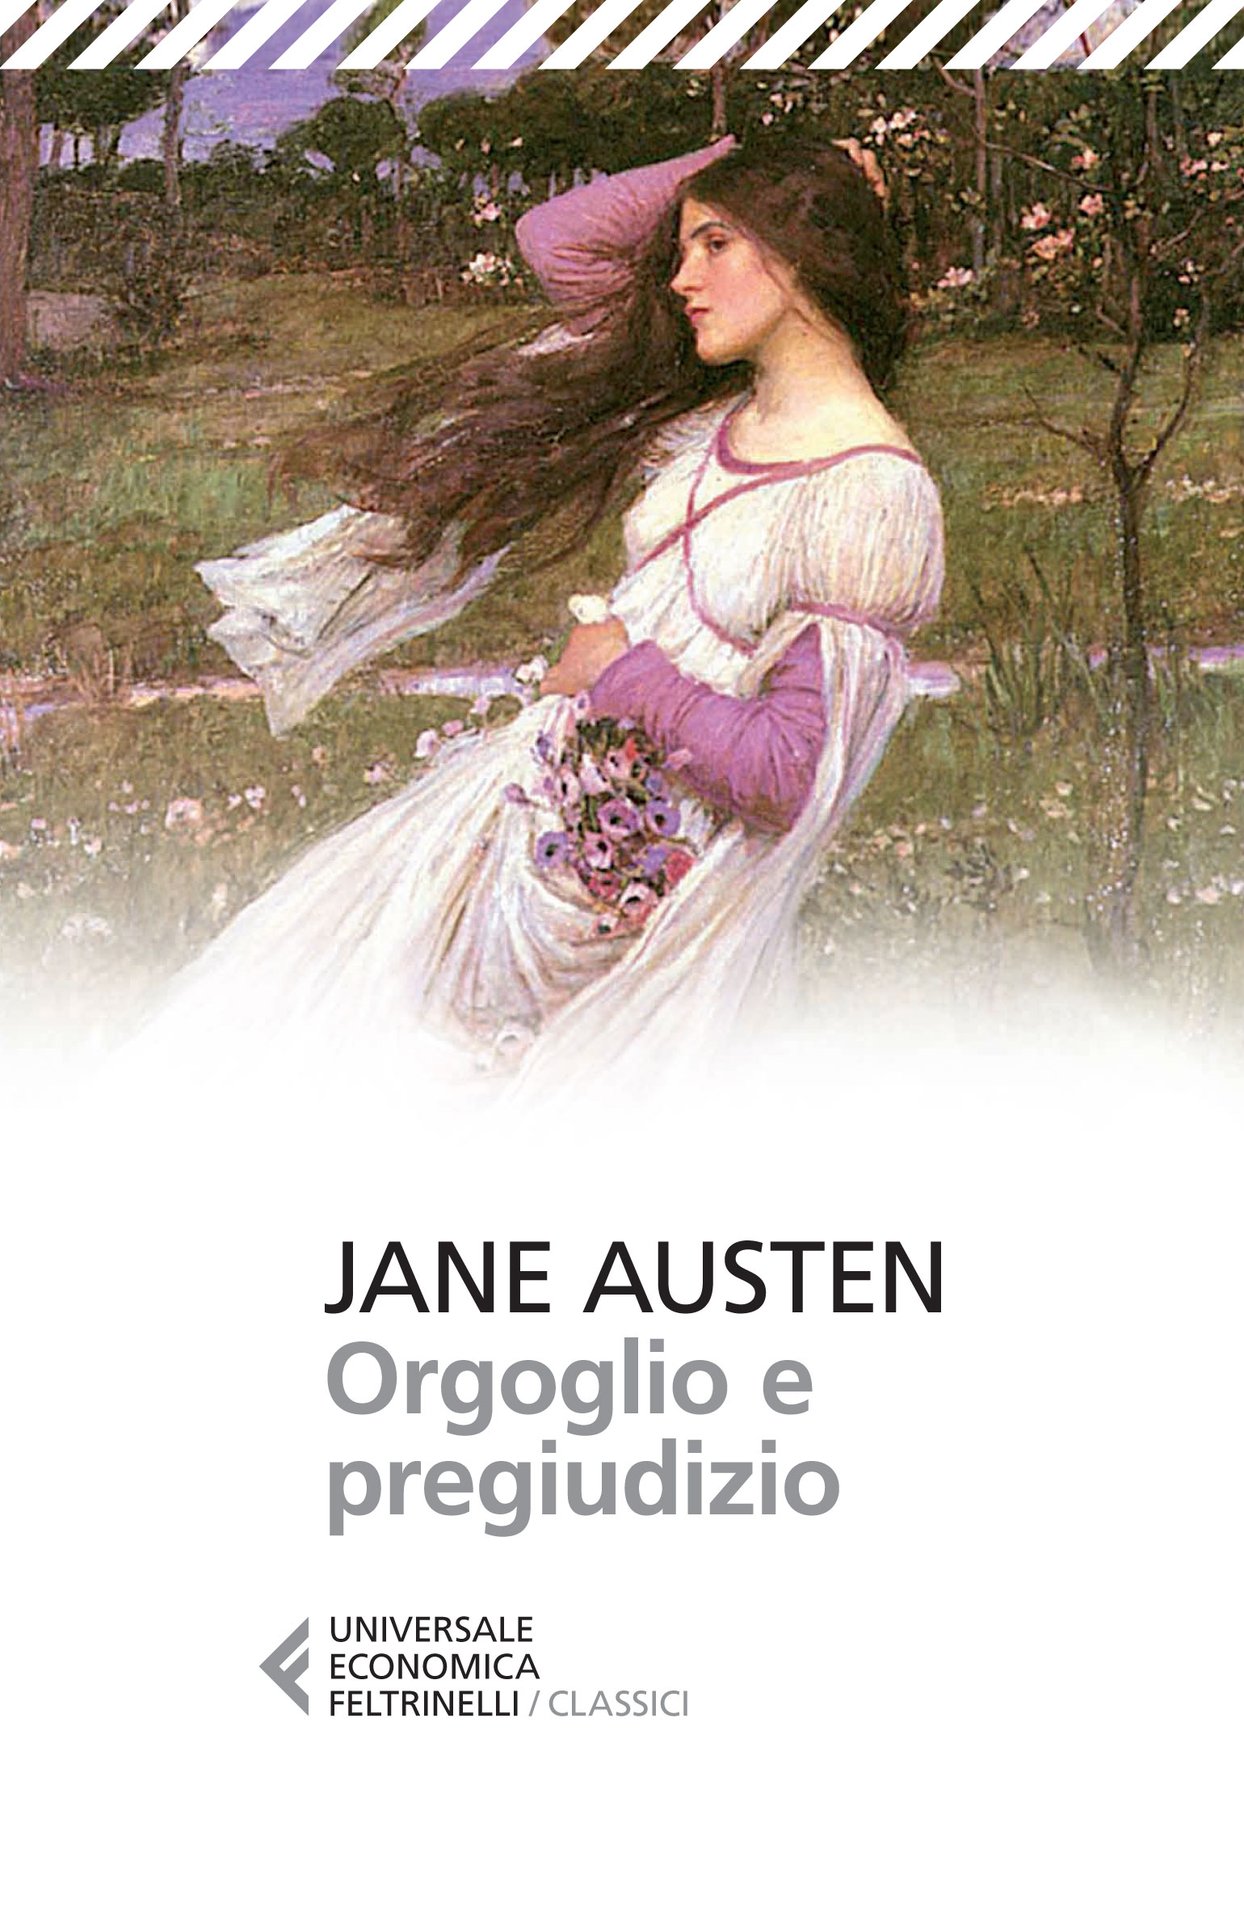 laF celebra Jane Austen